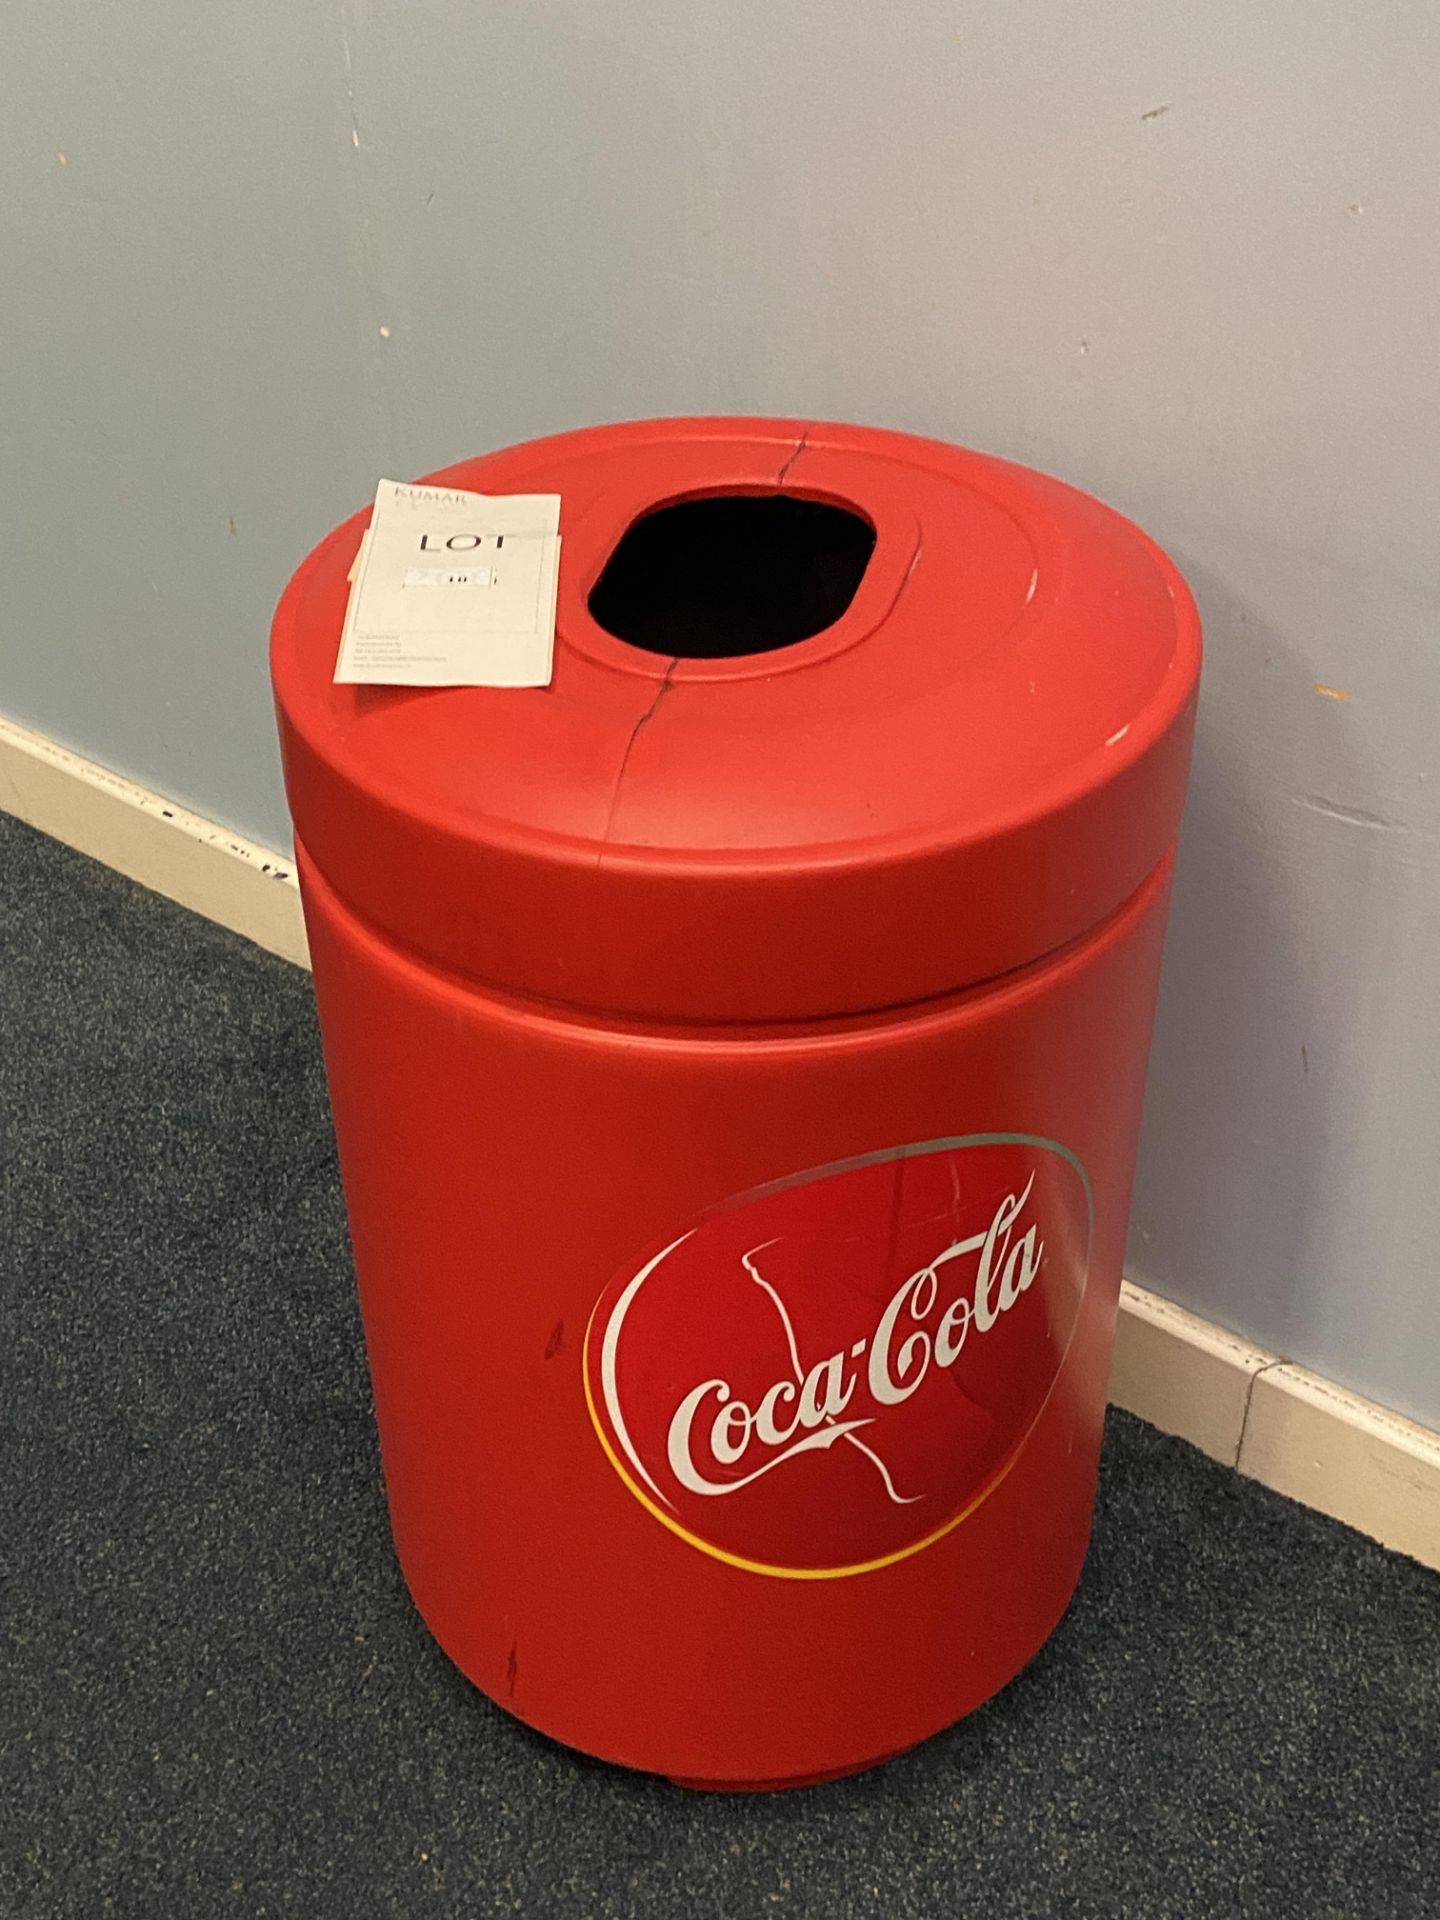 2: Coca Cola Branded Waste Bins - Image 4 of 4